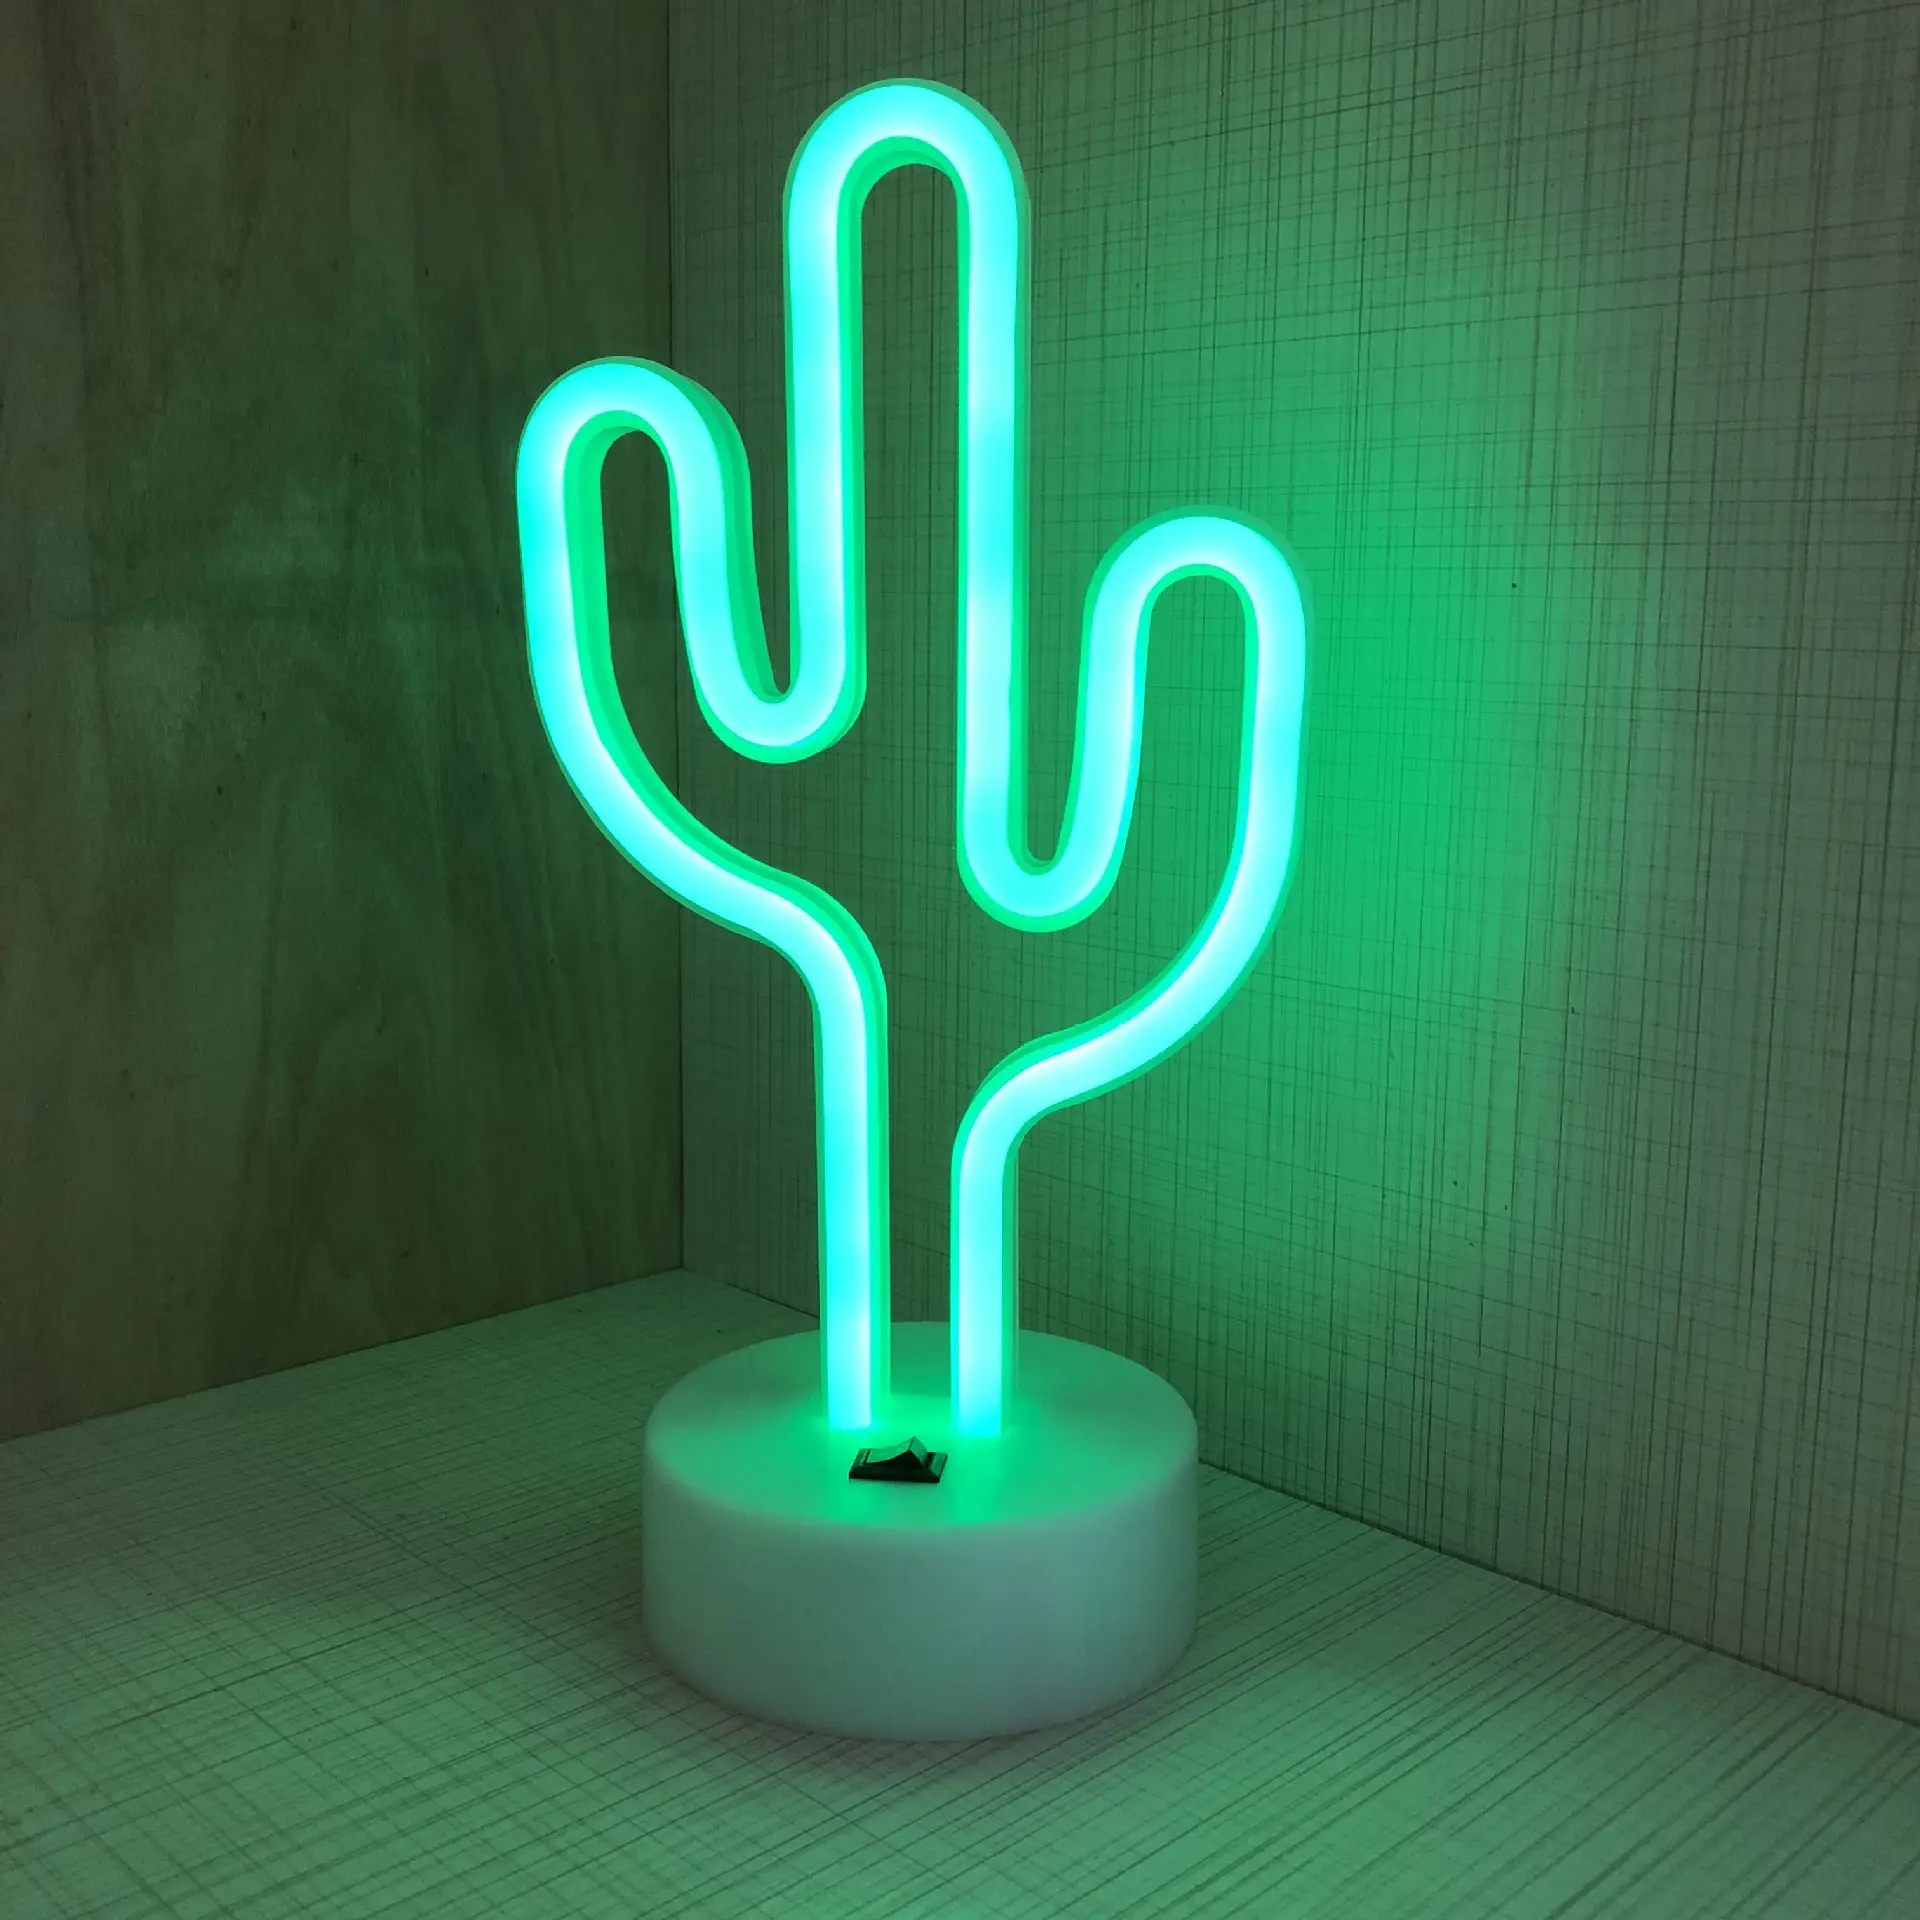 Grünes Licht Kaktus Formen Neon Basis Lampe Schlafzimmer Dekoration Batterie USB Dual Purpose 3D LED Kunststoff Basis Neon Lampe